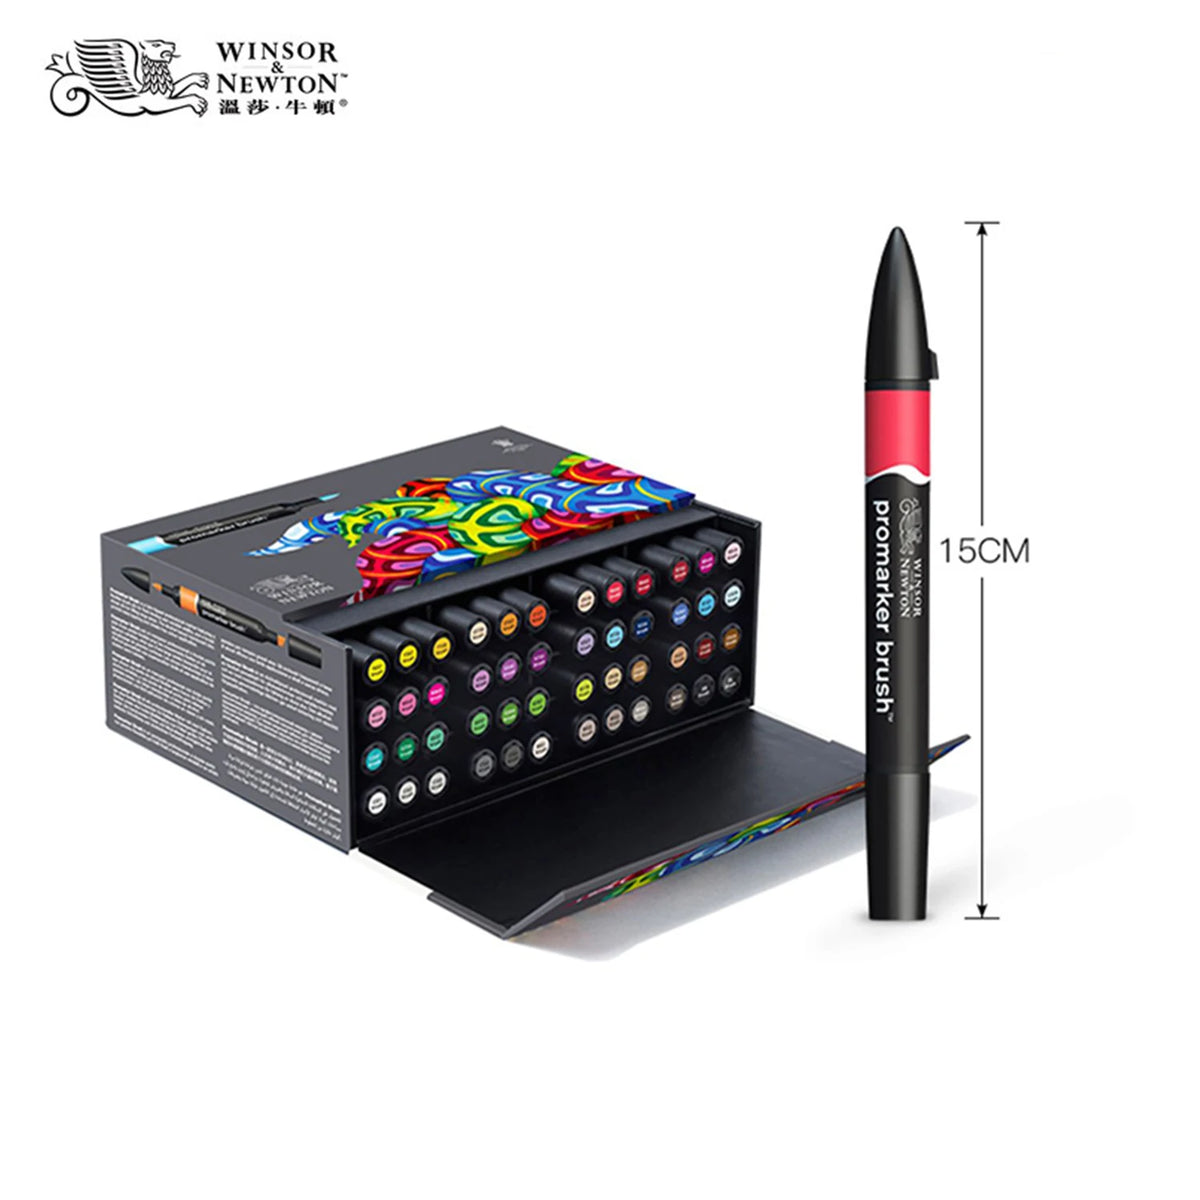 Winsor & Newton Promarker 48 Colors Art Marker Pen Set – AOOKMIYA